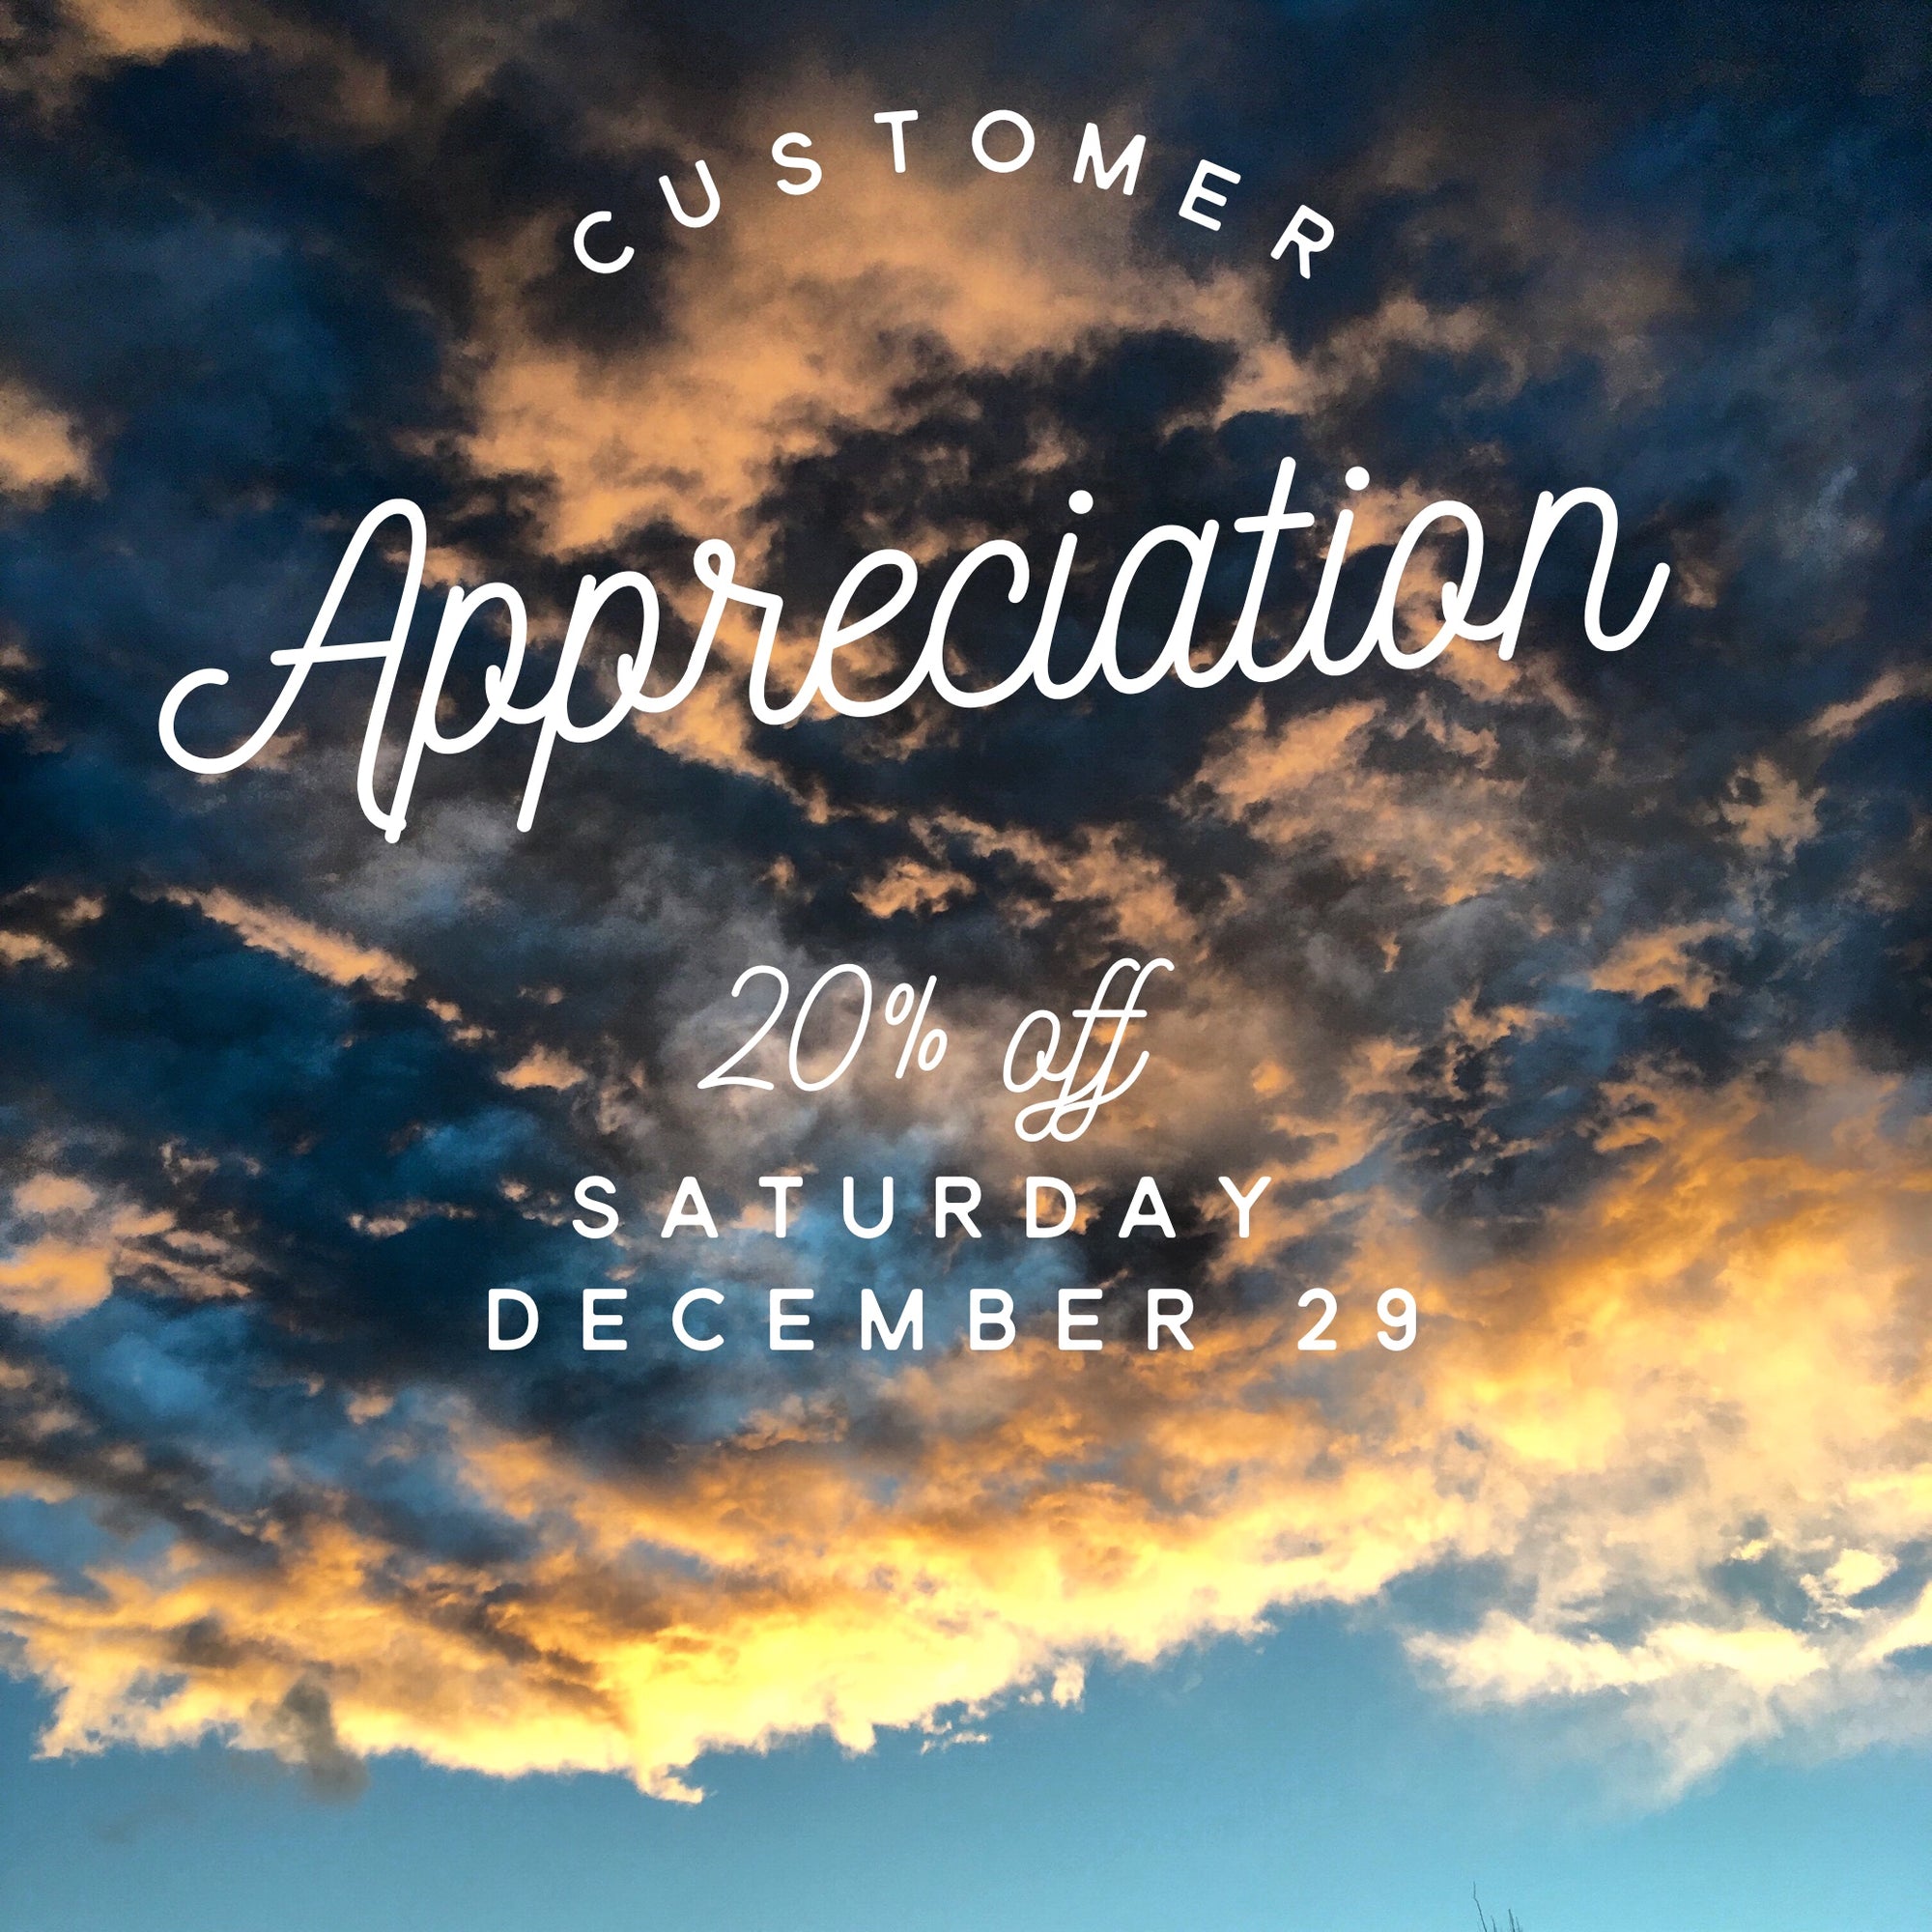 Transition Celebration + 20% off Customer Appreciation | December 29, 10am to 6pm